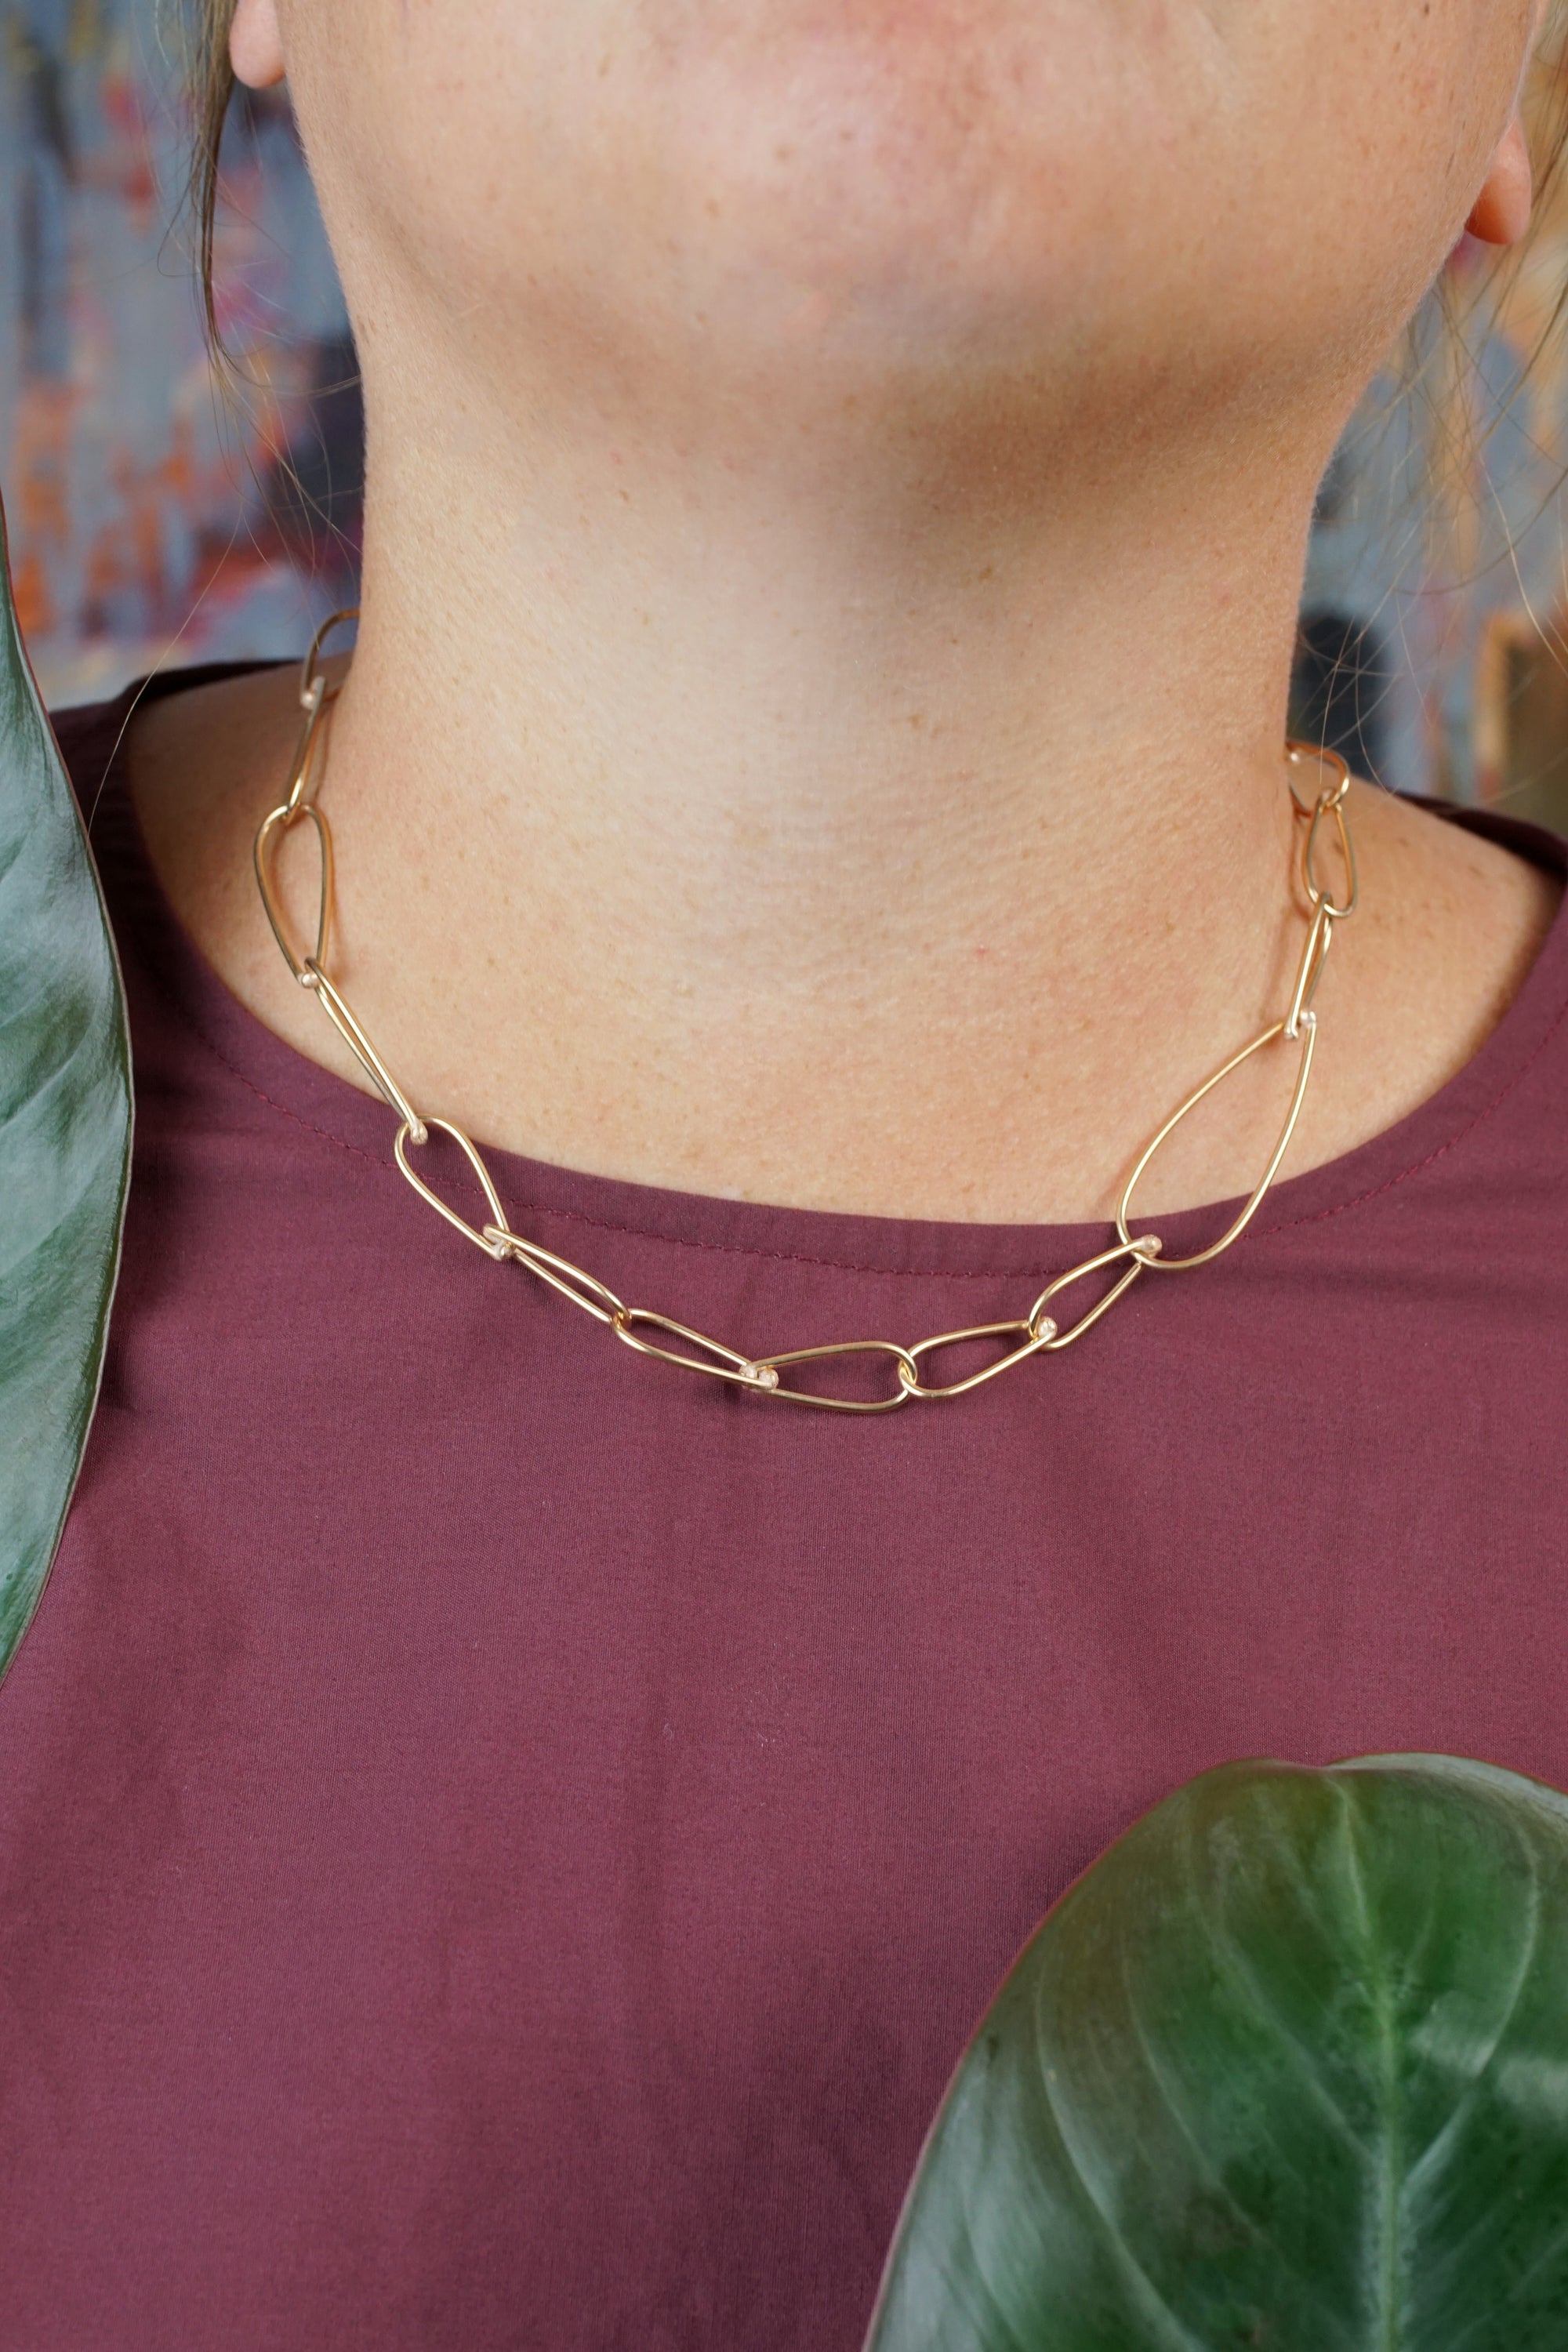 Petite Modular Necklace No. 2 in bronze